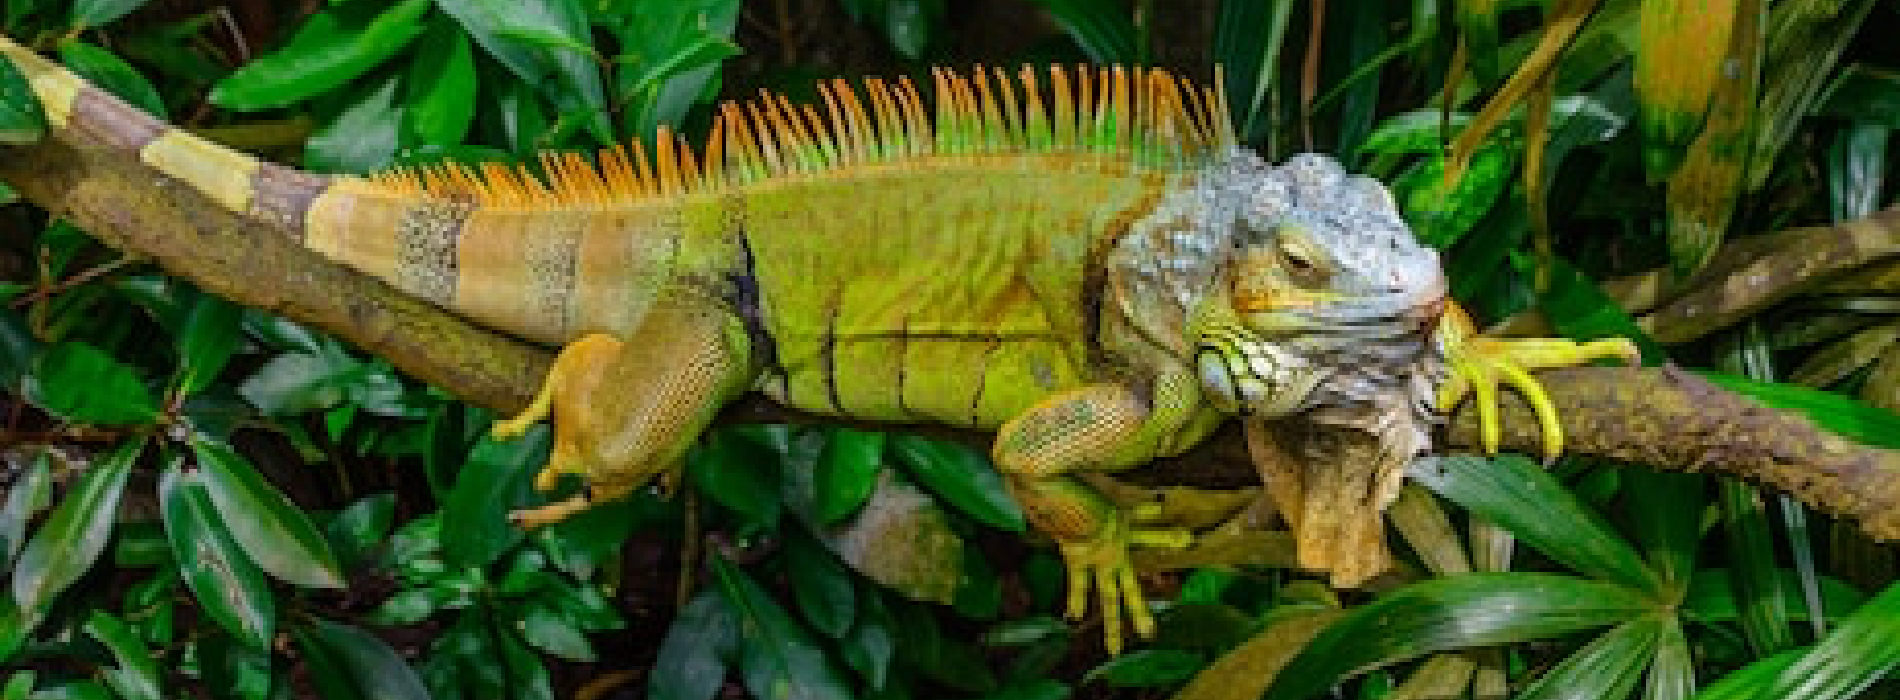 Green Iguana as Pets: Keeping & Caring